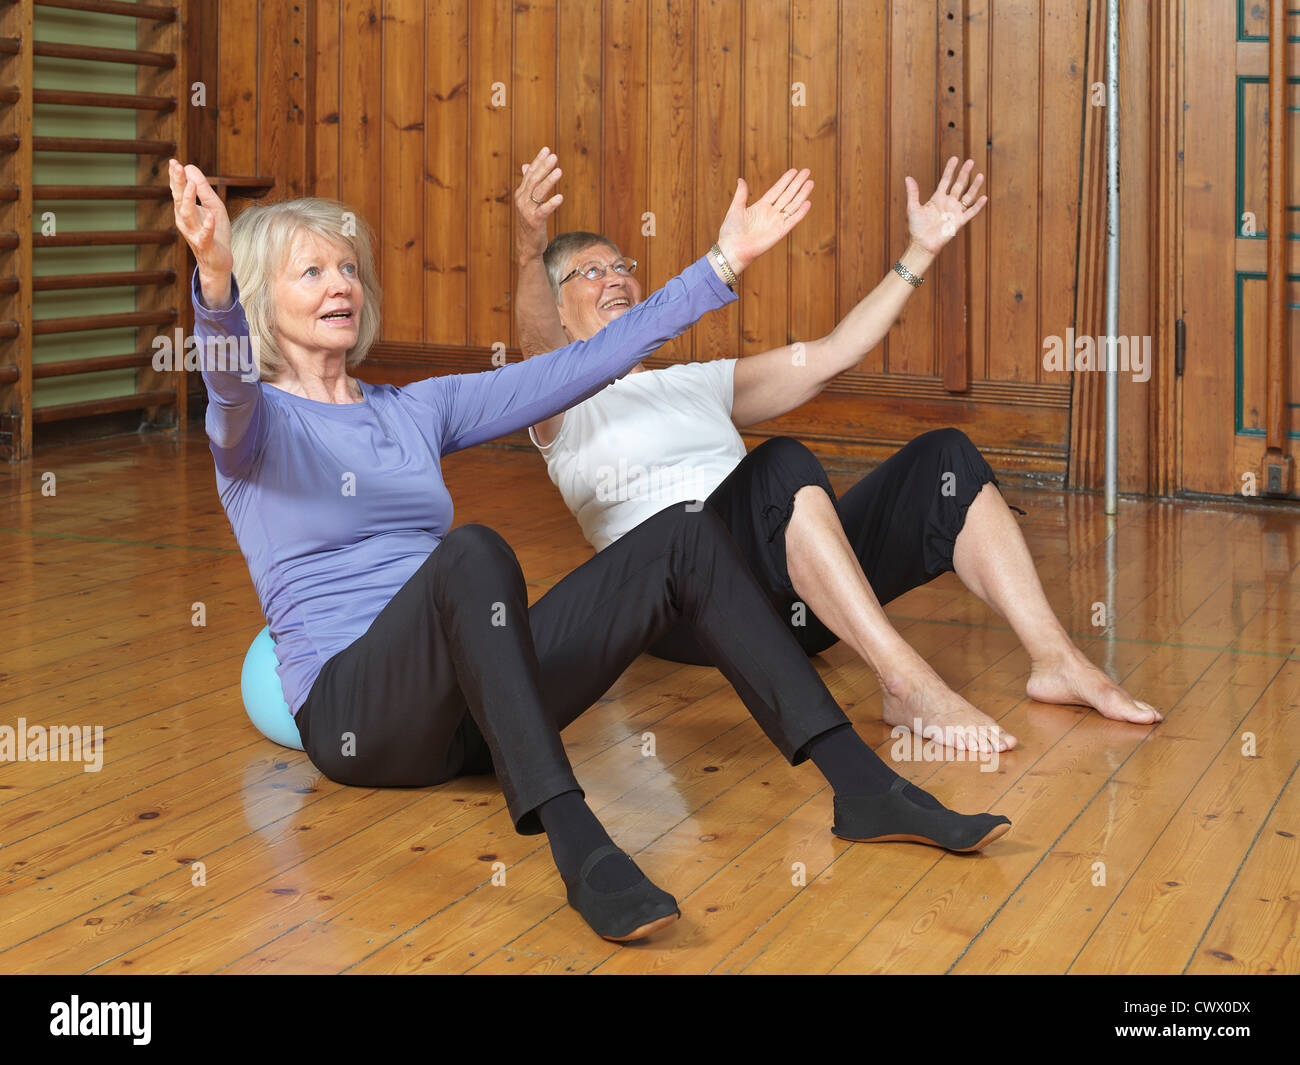 Women practicing yoga together in studio Stock Photo